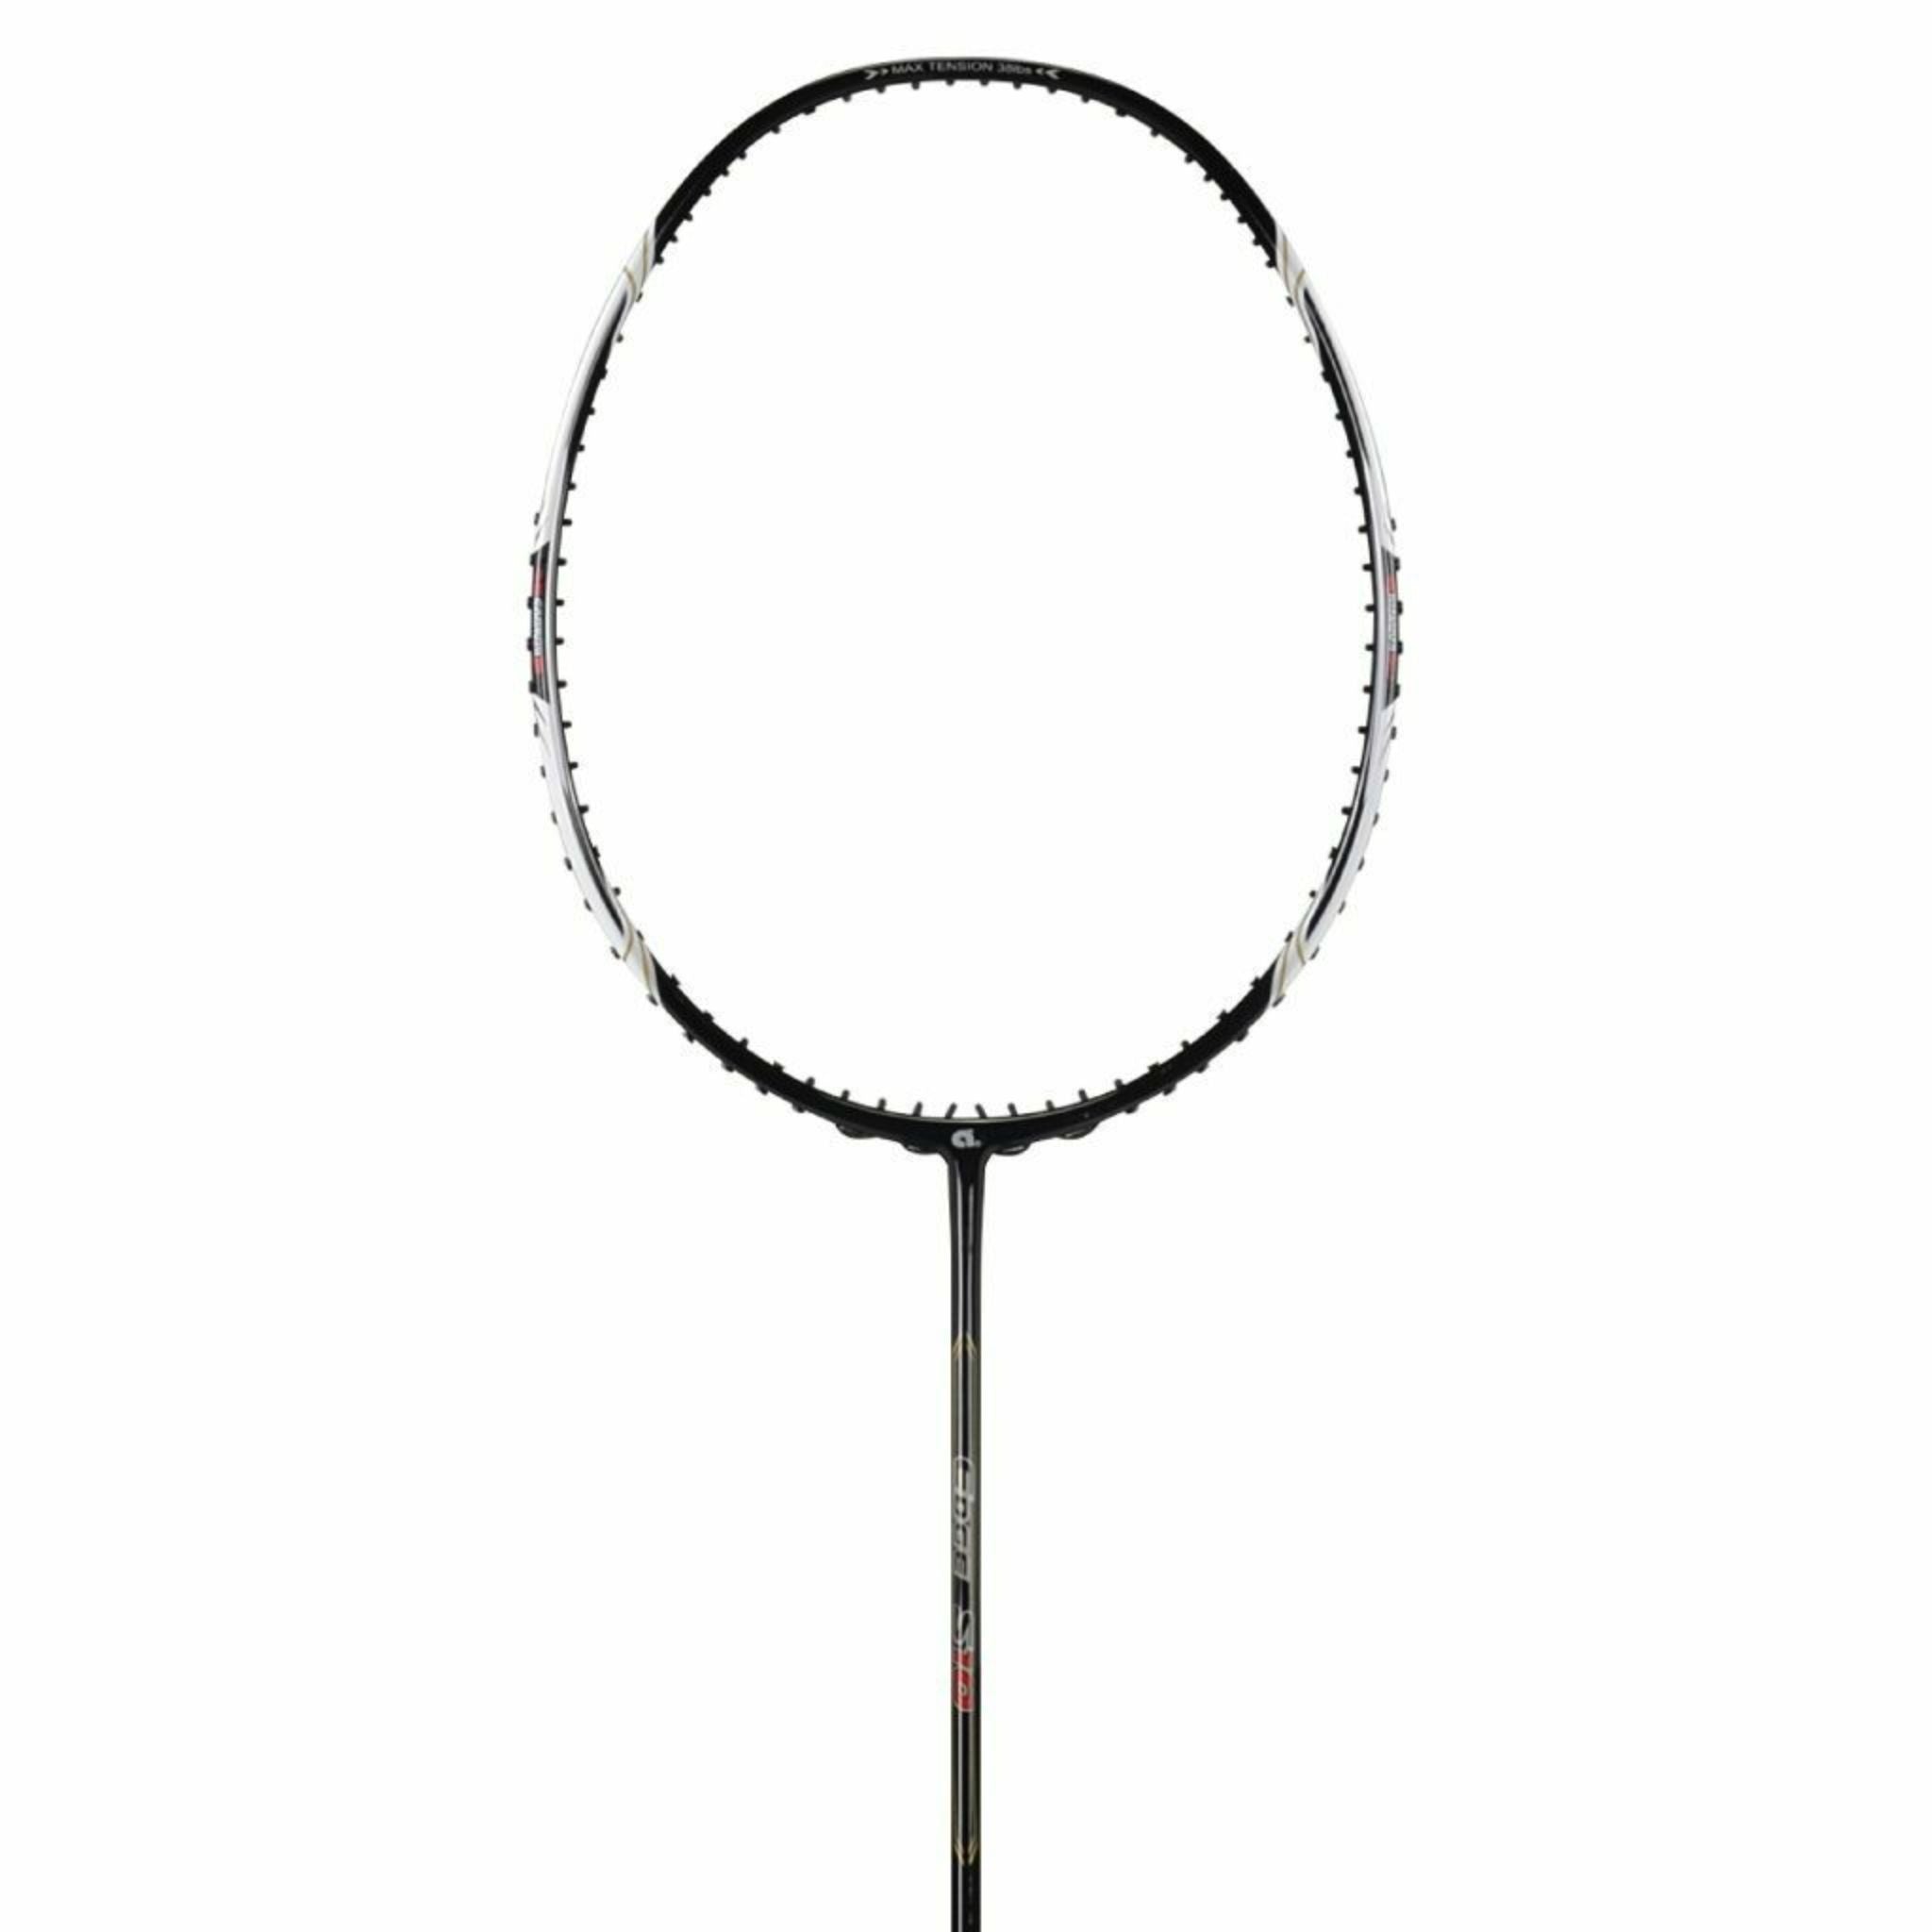 APACS Edge S 10 Badminton Racket